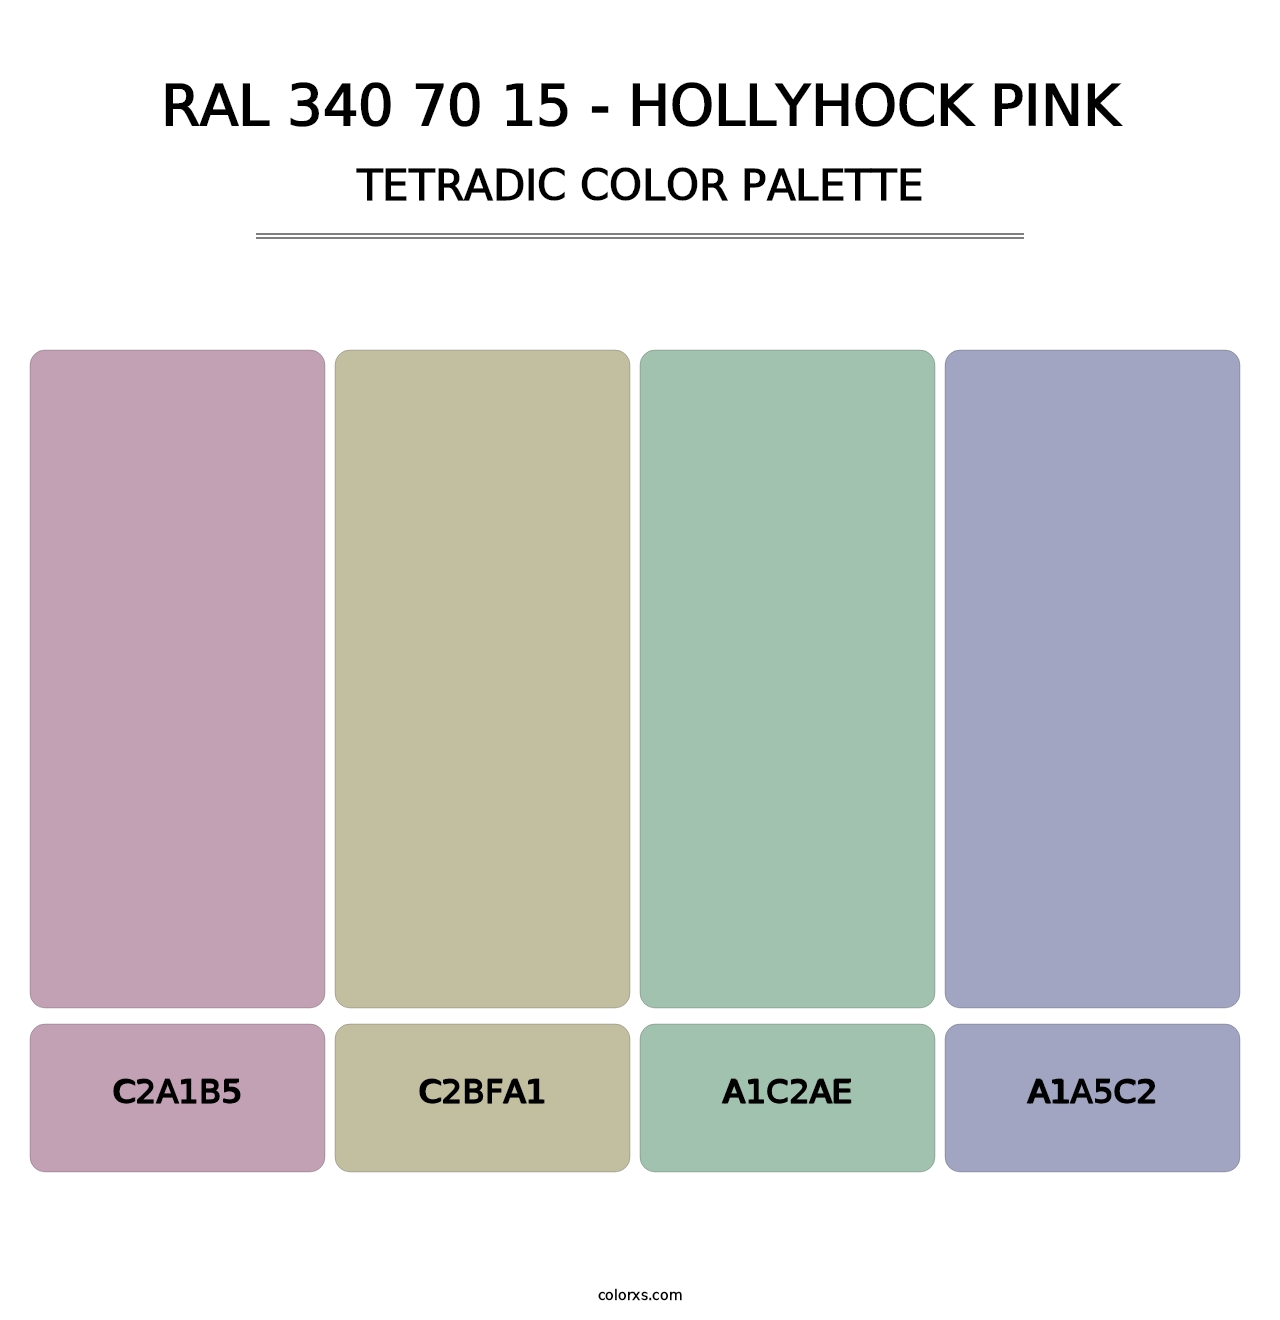 RAL 340 70 15 - Hollyhock Pink - Tetradic Color Palette